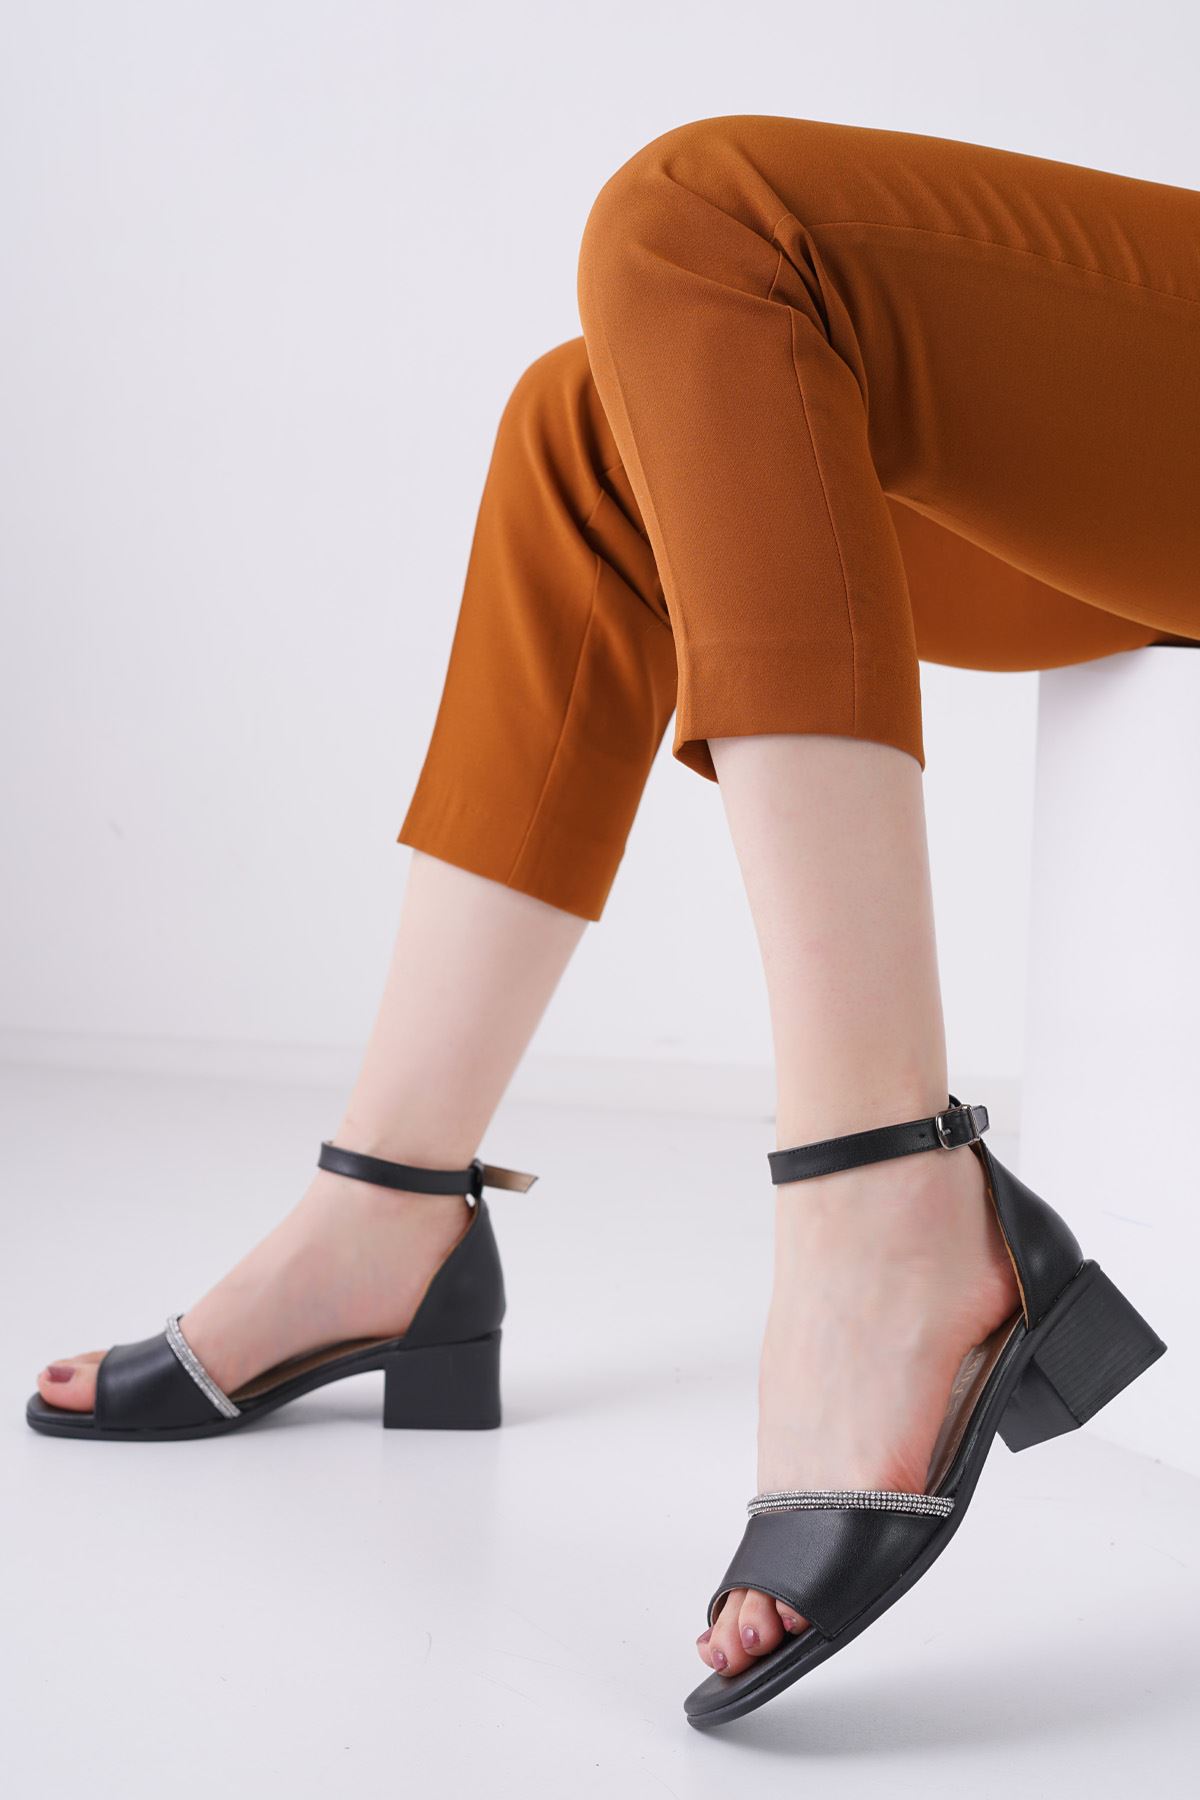 Auron Siyah Mat Deri Kadın Topuklu Ayakkabı